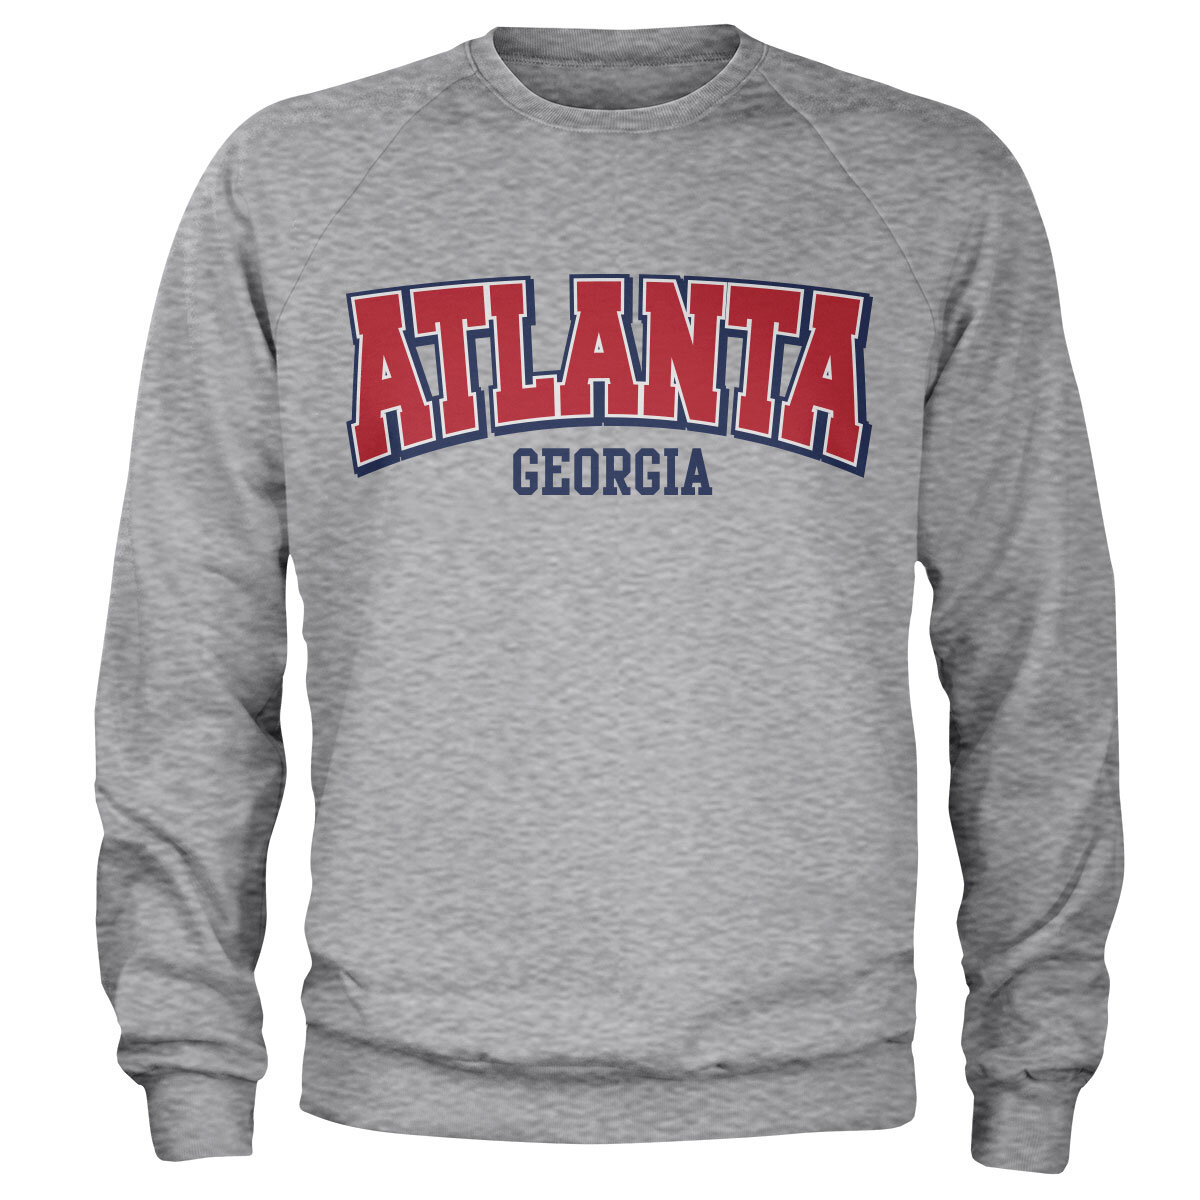 Atlanta - Georgia Sweatshirt